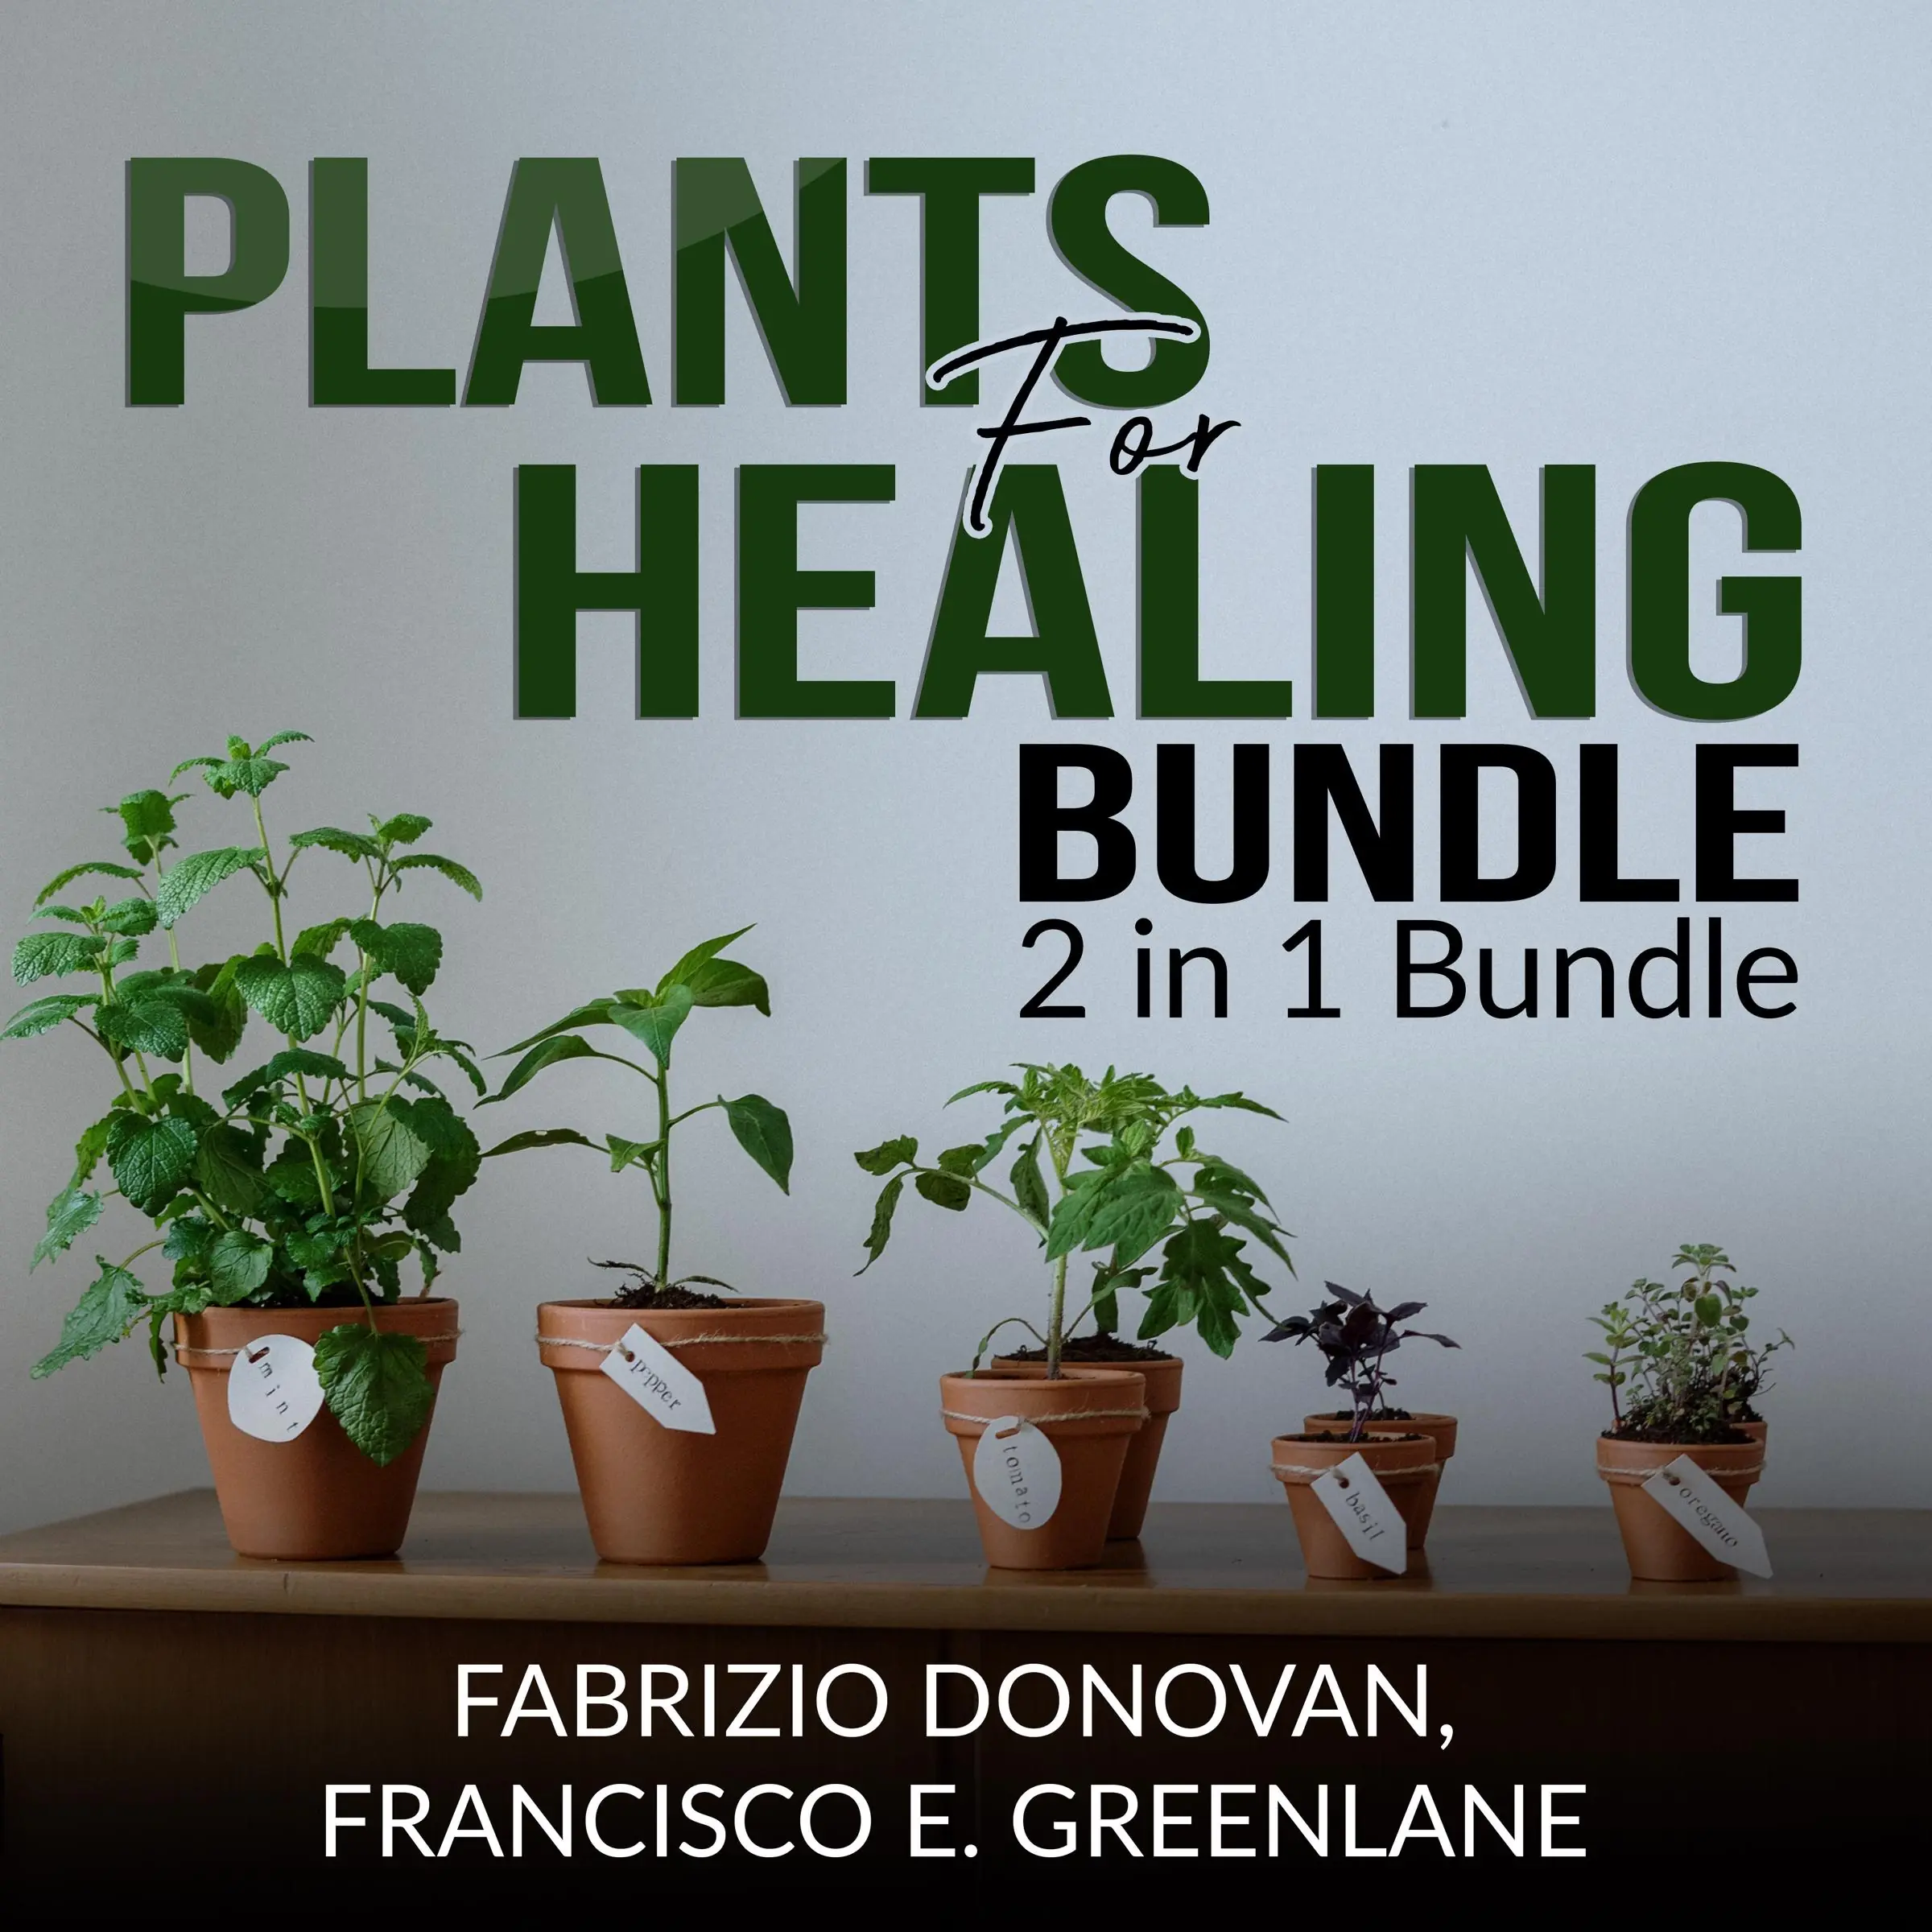 Plants for Healing Bundle: 2 in 1 Bundle, Medicinal Plants, Medicinal Herbs Audiobook by Fabrizio Donovan and Francisco E. Greenlane